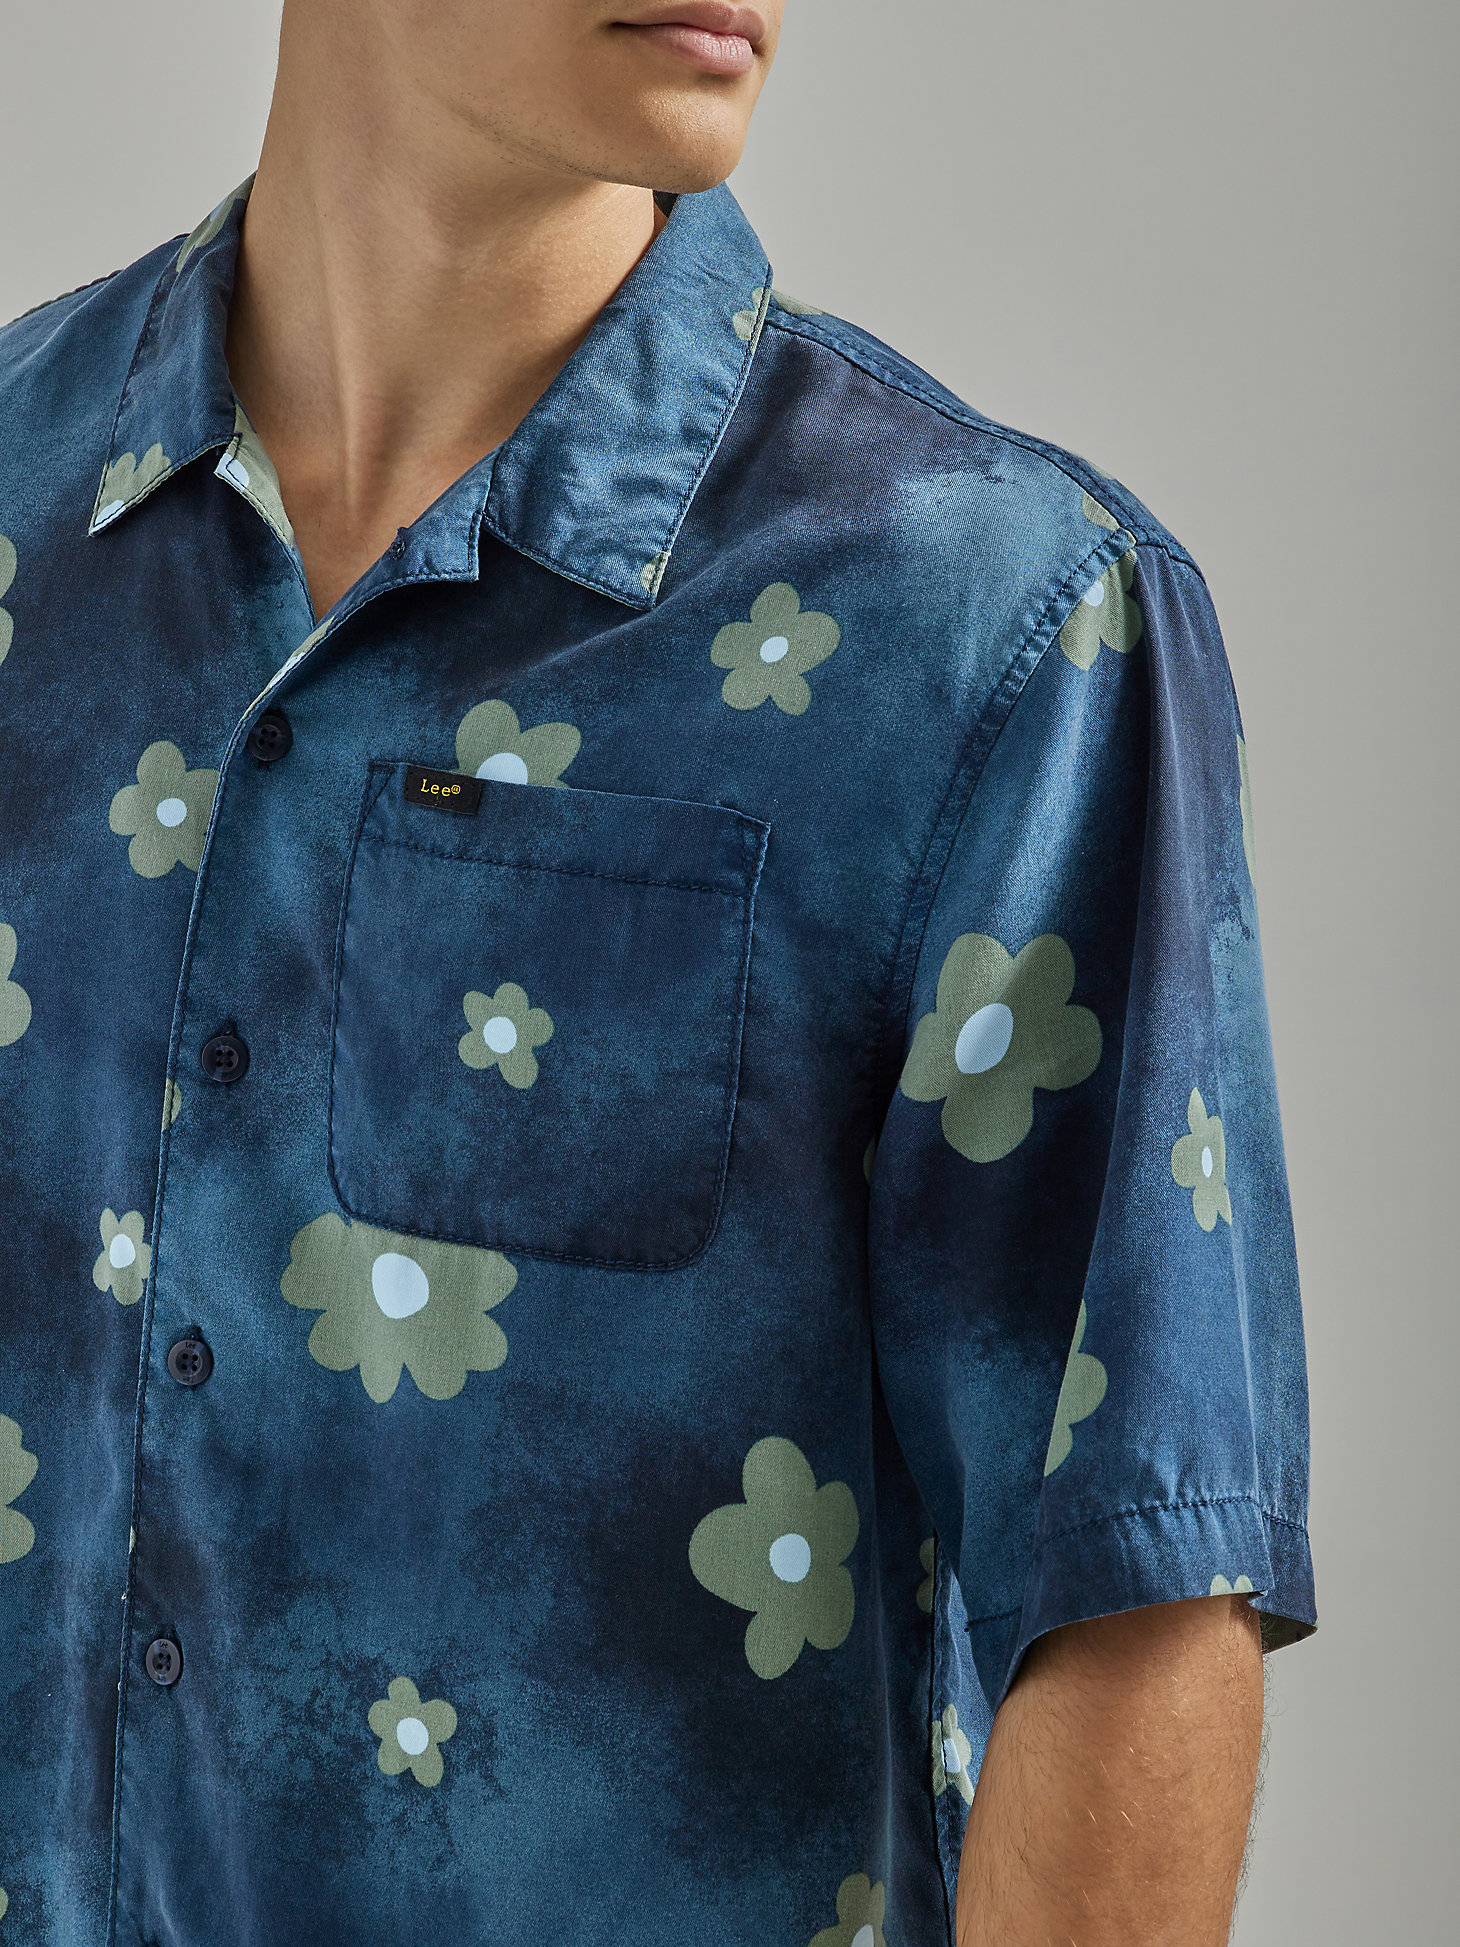 Men's Oversized Floral Resort Shirt in Rivet Navy Floral alternative view 2